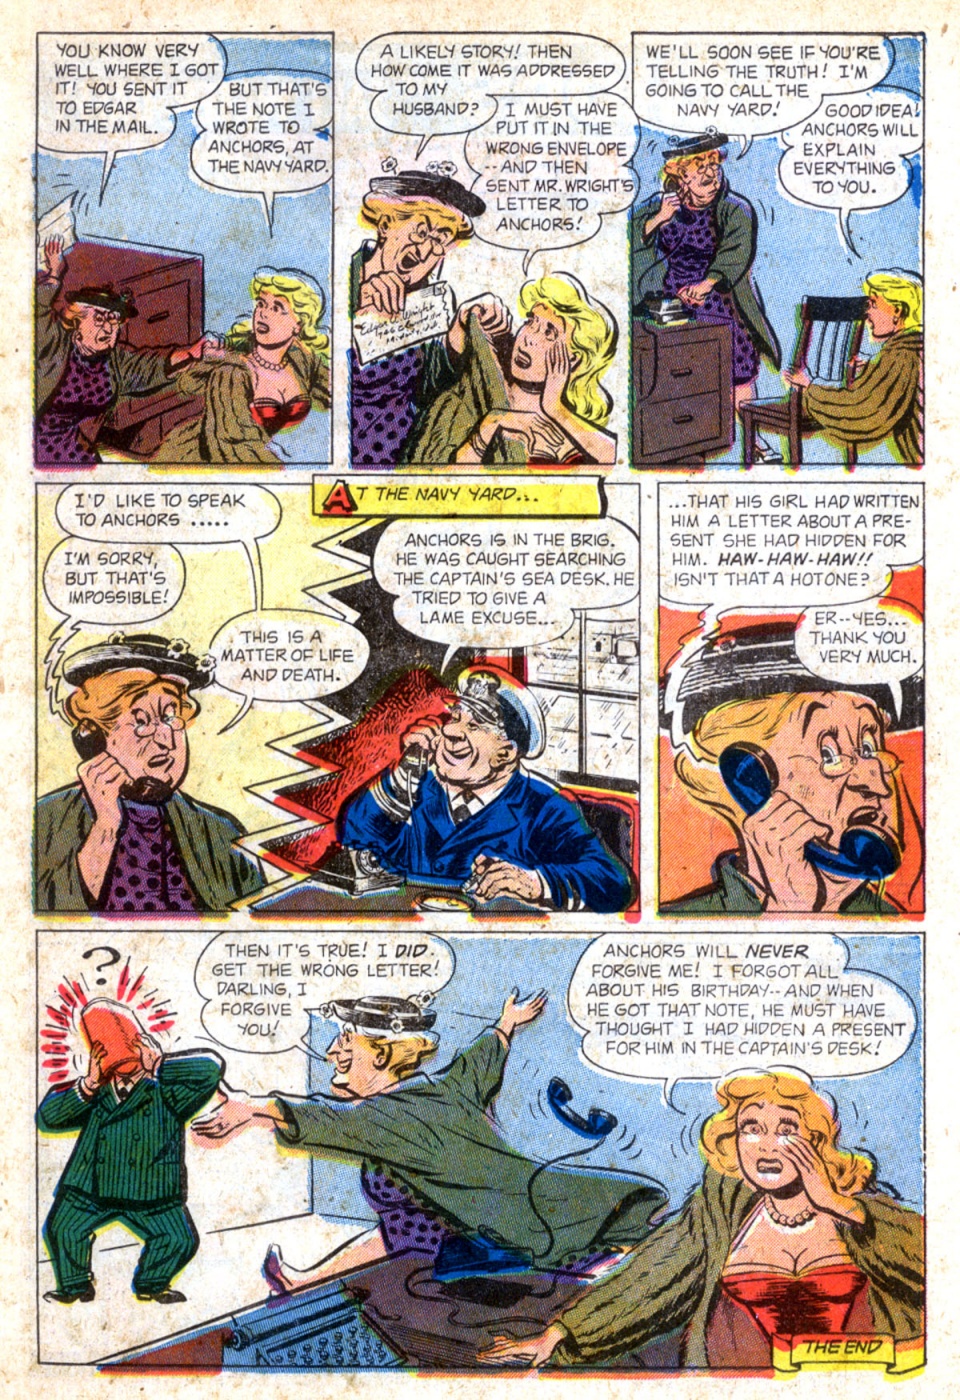 Anchors the Salt Water Daffy - Comics (b) (11)